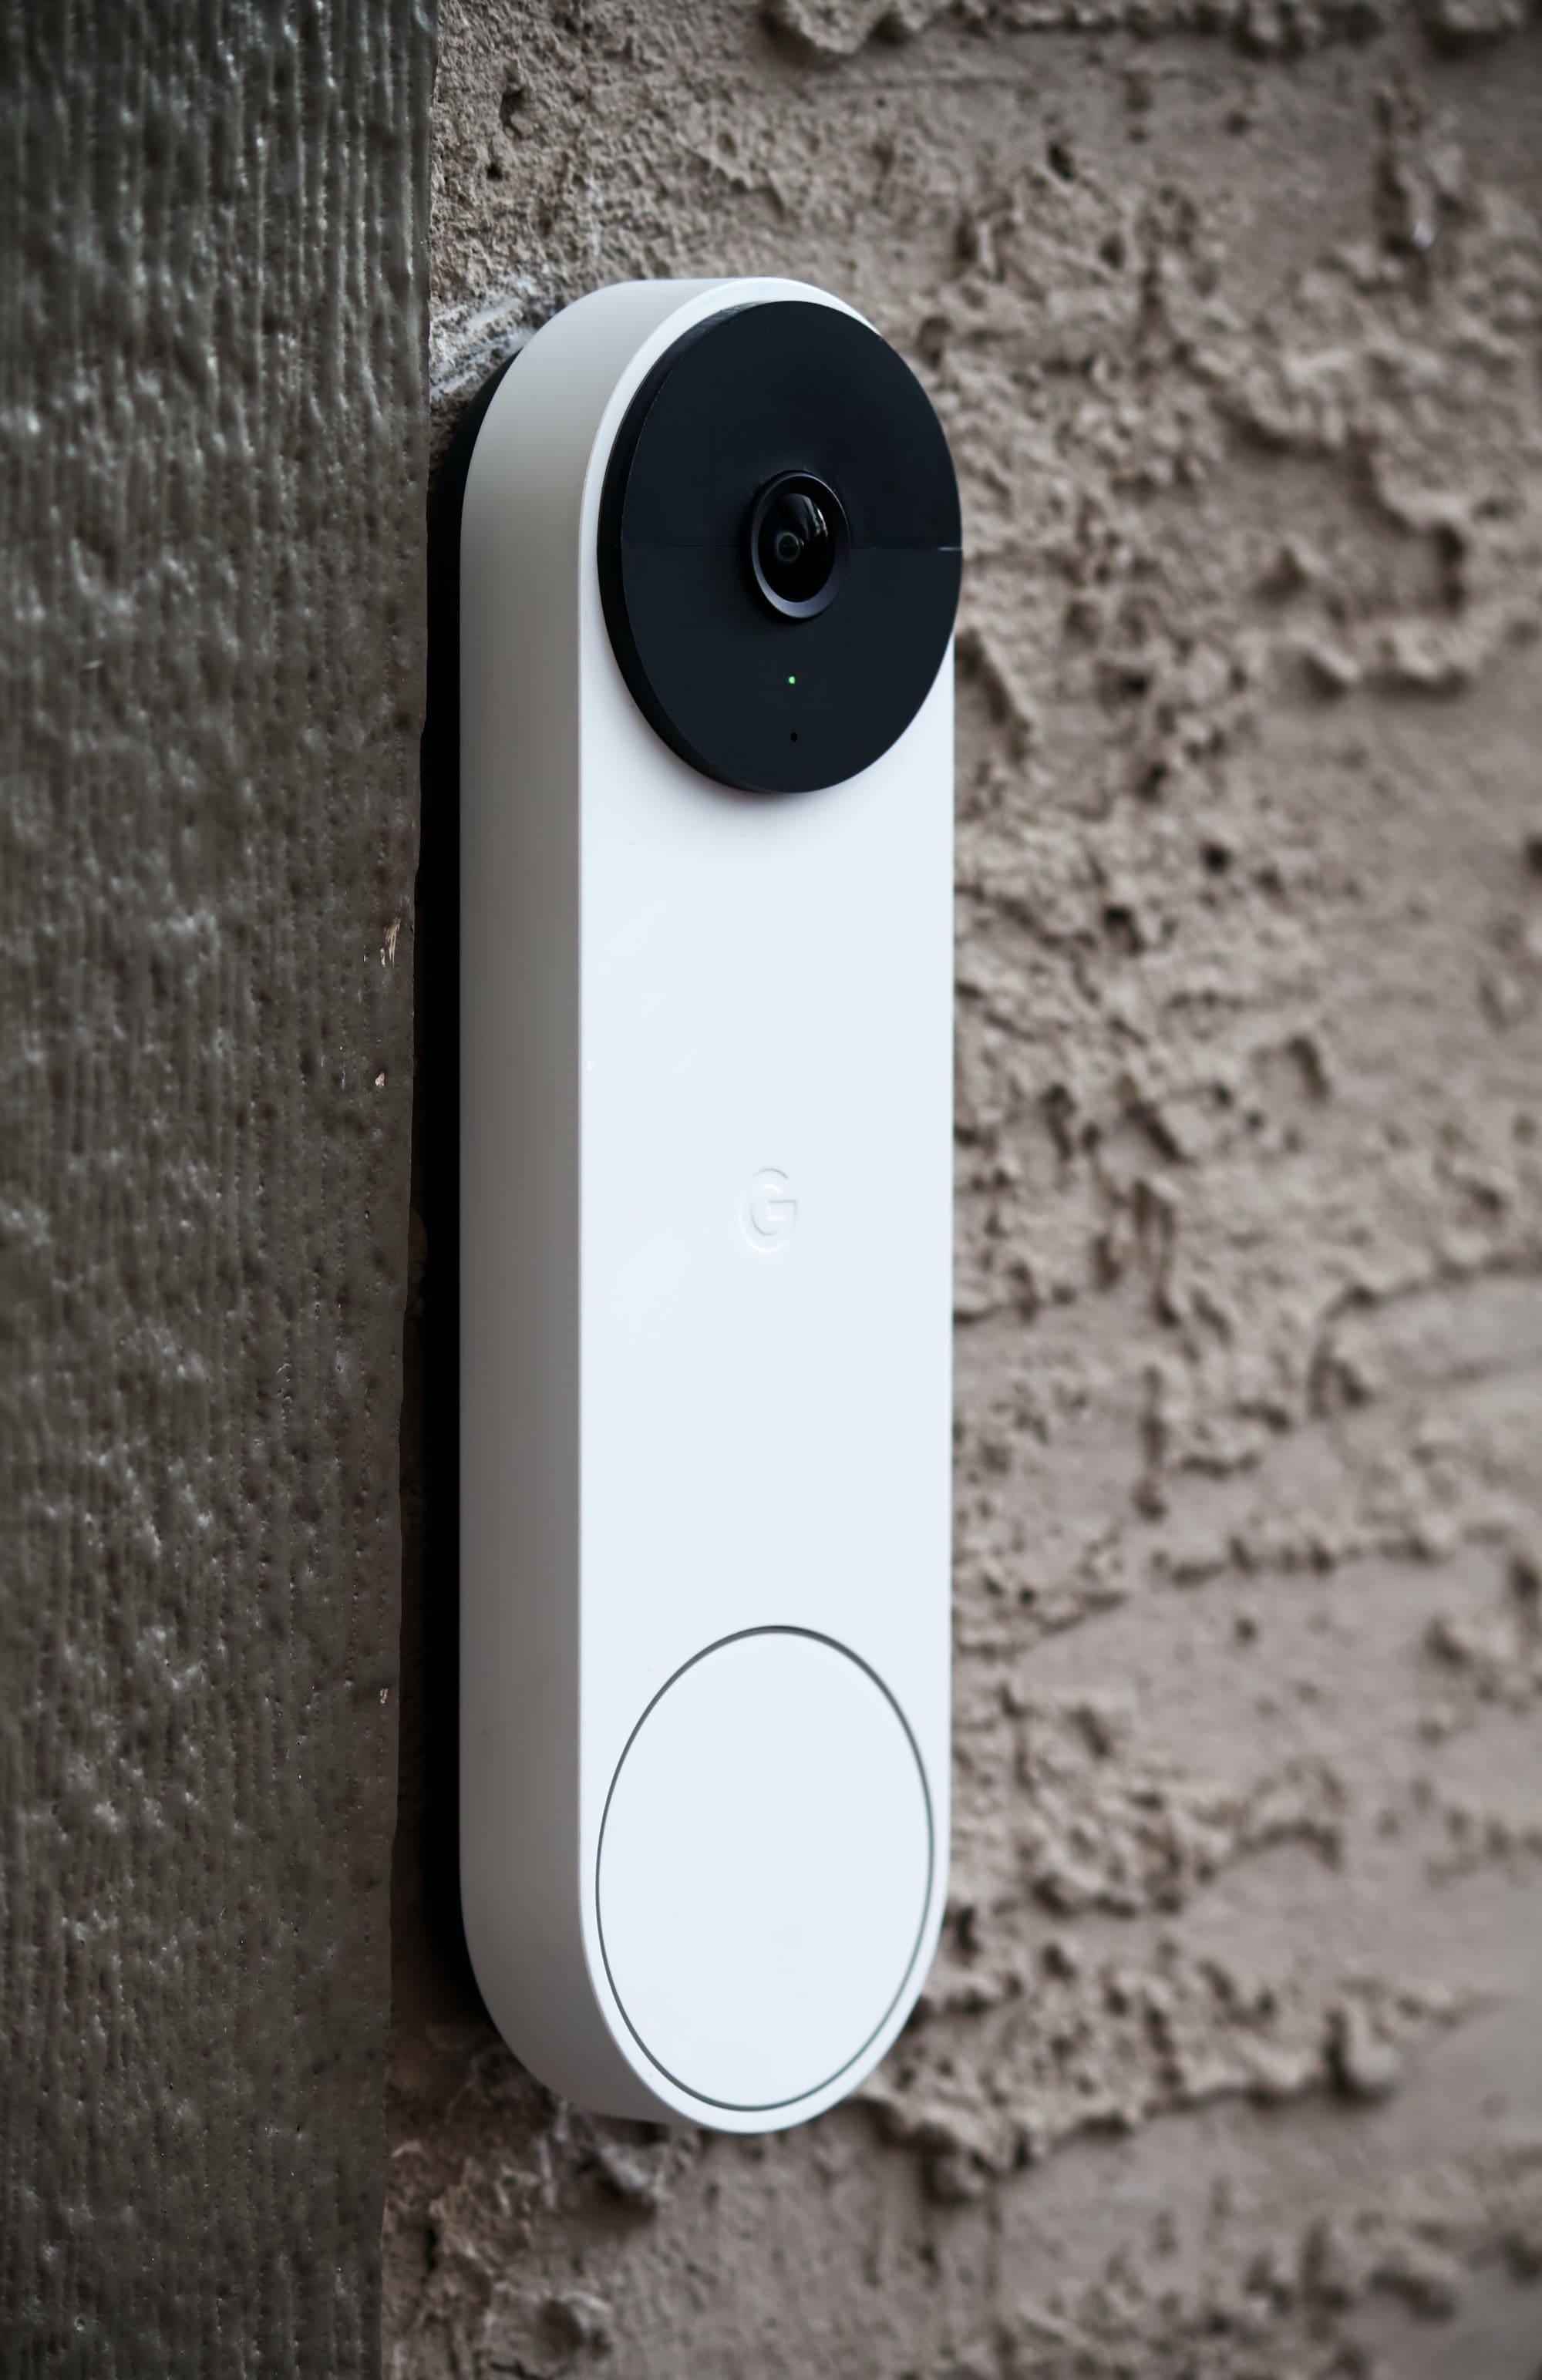 Video Doorbell Installation And Setup